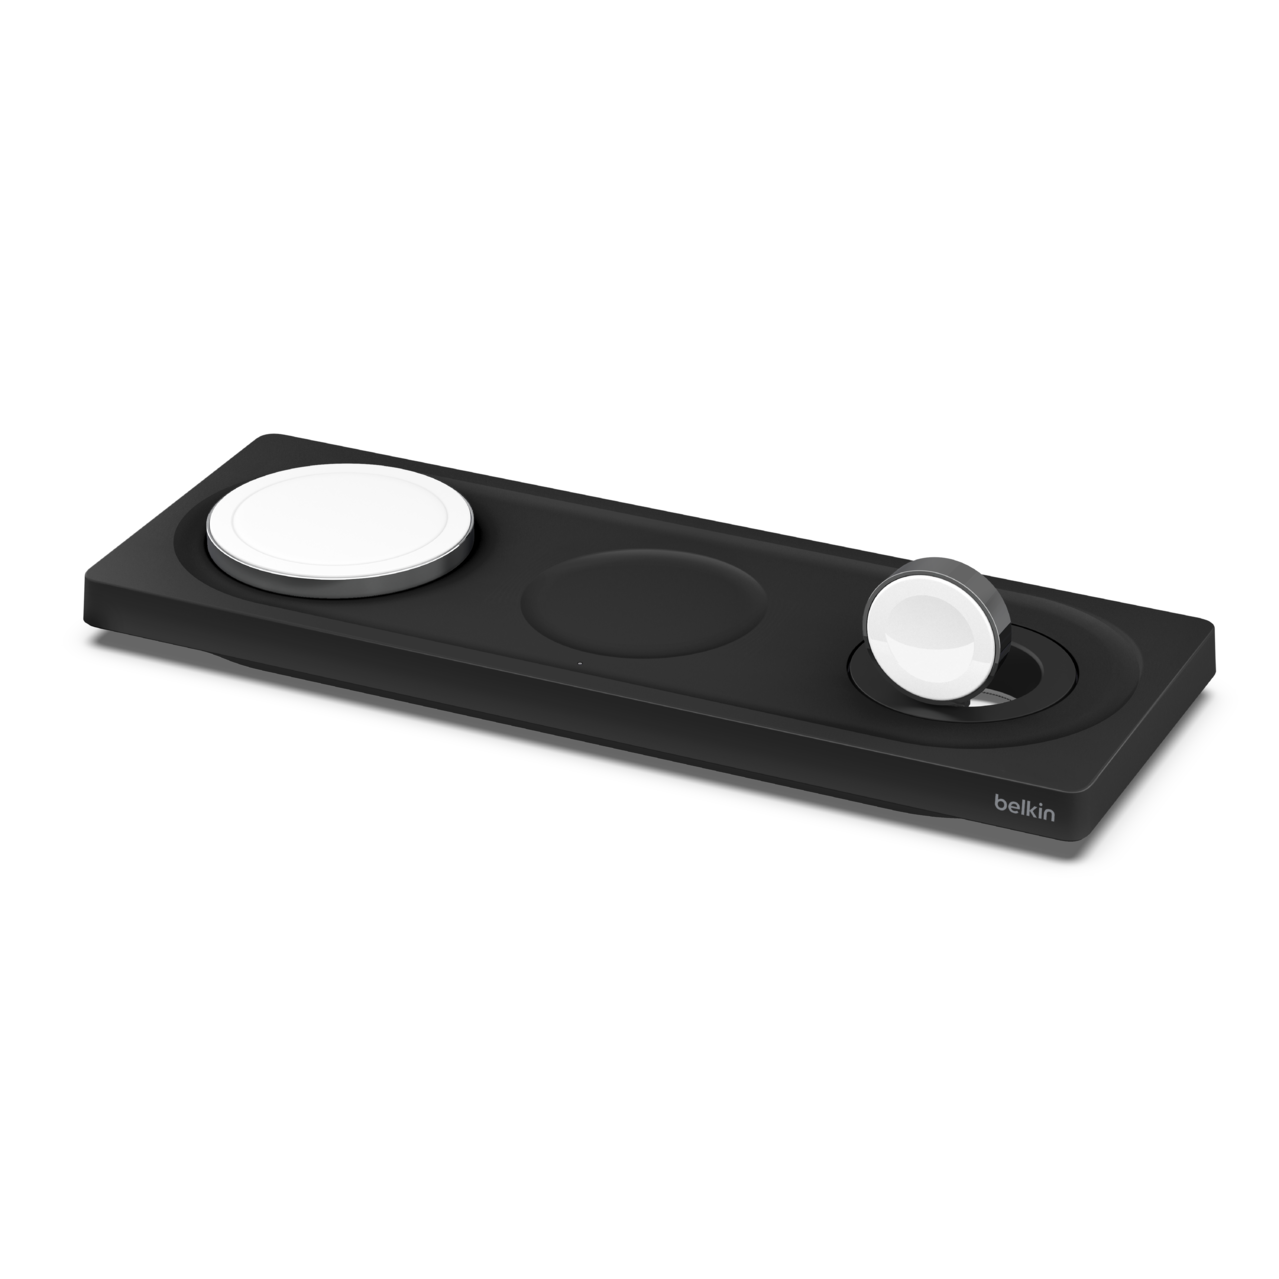 Belkin BoostCharge Pro 3-in-1 MagSafe Pad 15W in Black